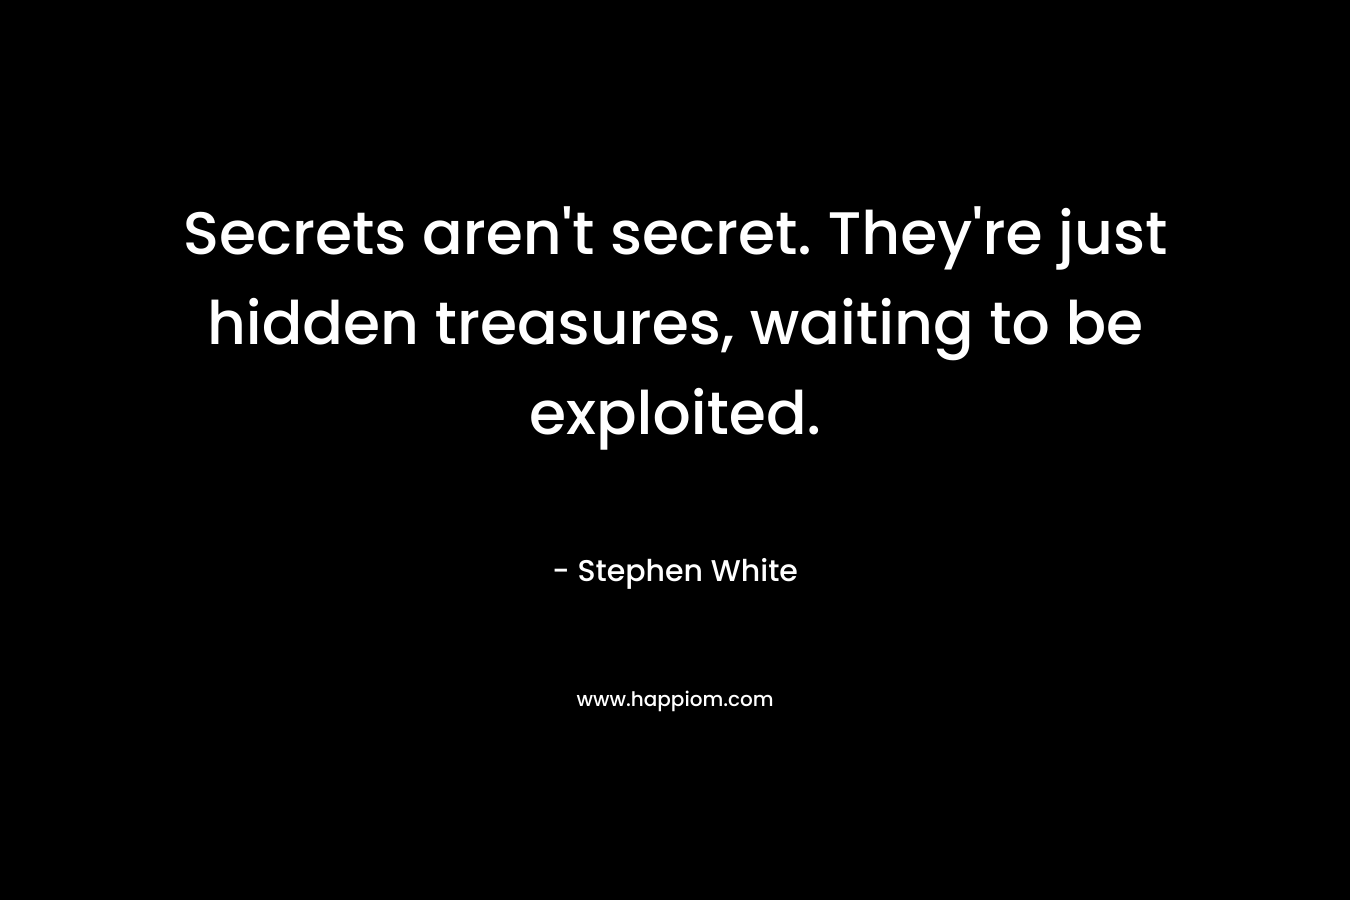 Secrets aren't secret. They're just hidden treasures, waiting to be exploited.